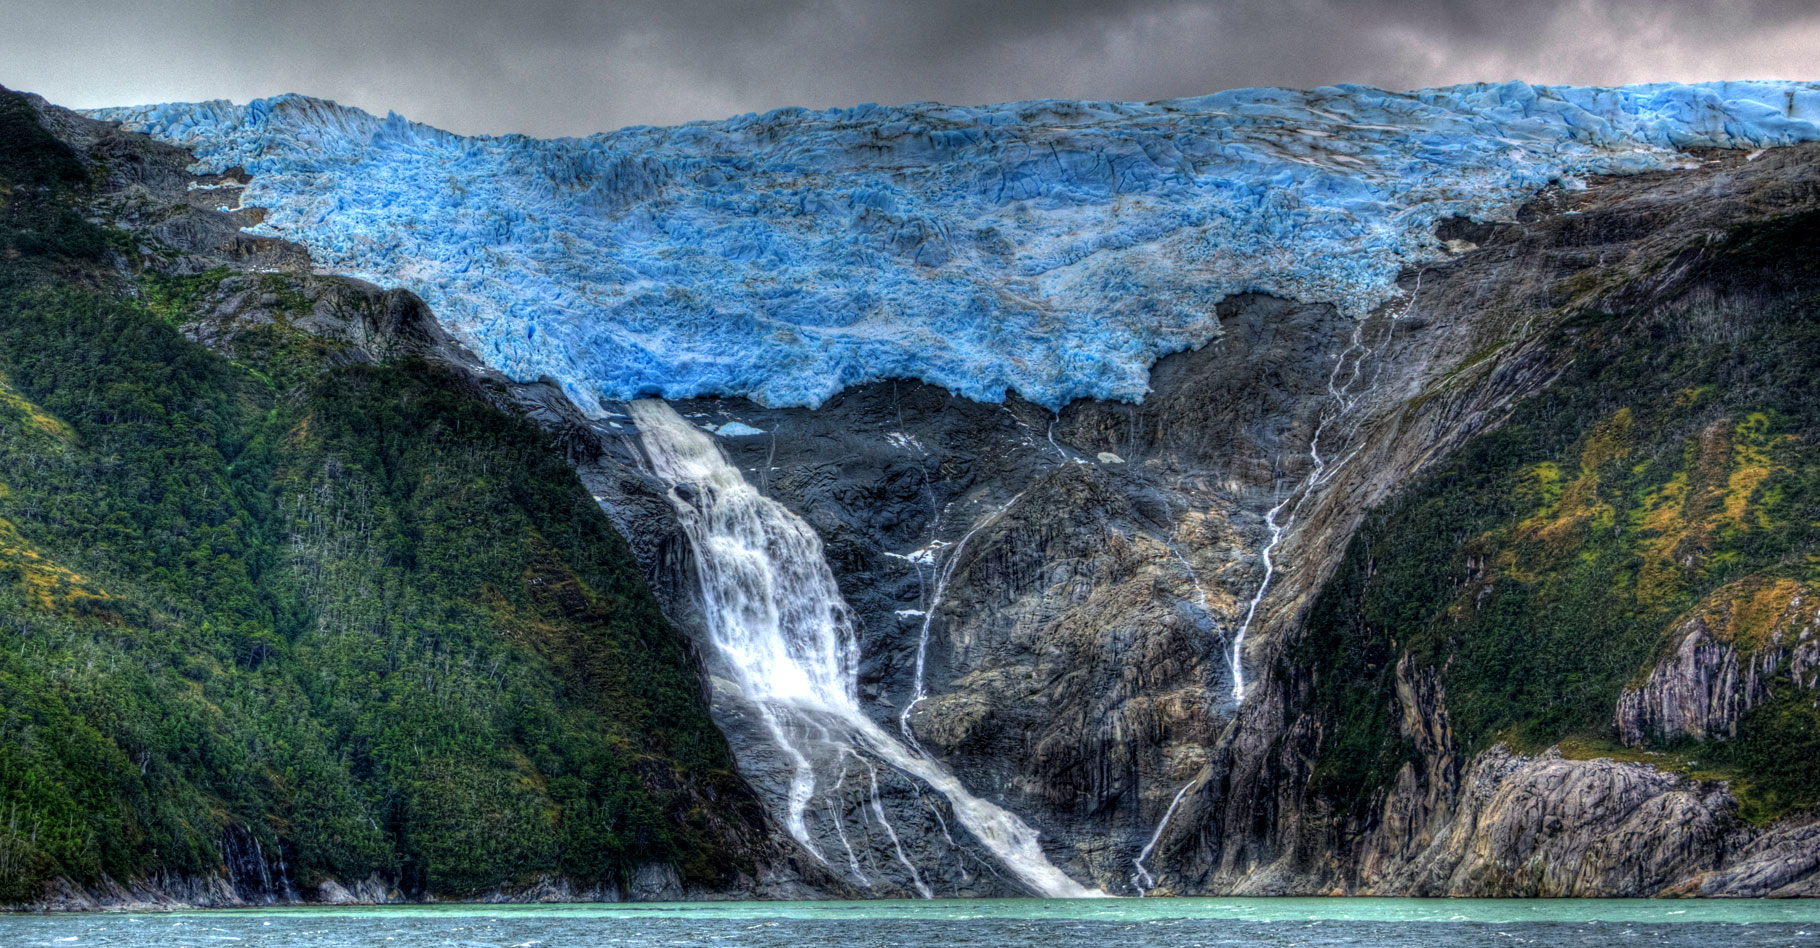 Le glacier Romanche de la cordillère Darwin situé dans le Parc National Alberto Chili. © Vin on the move - CC BY-NC 2.0